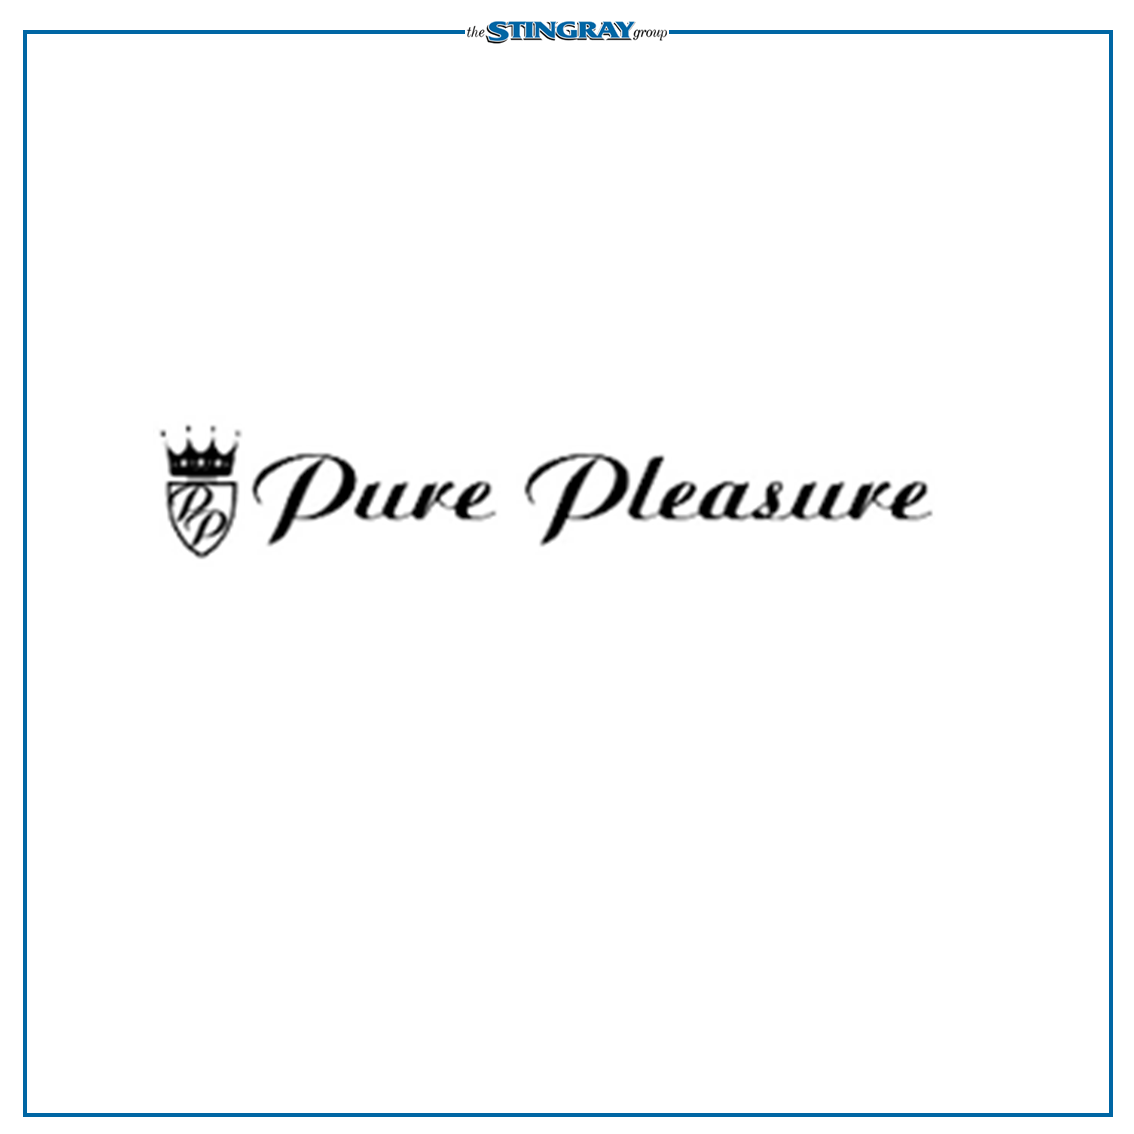 STINGRAY - PurePleasure Catalogue